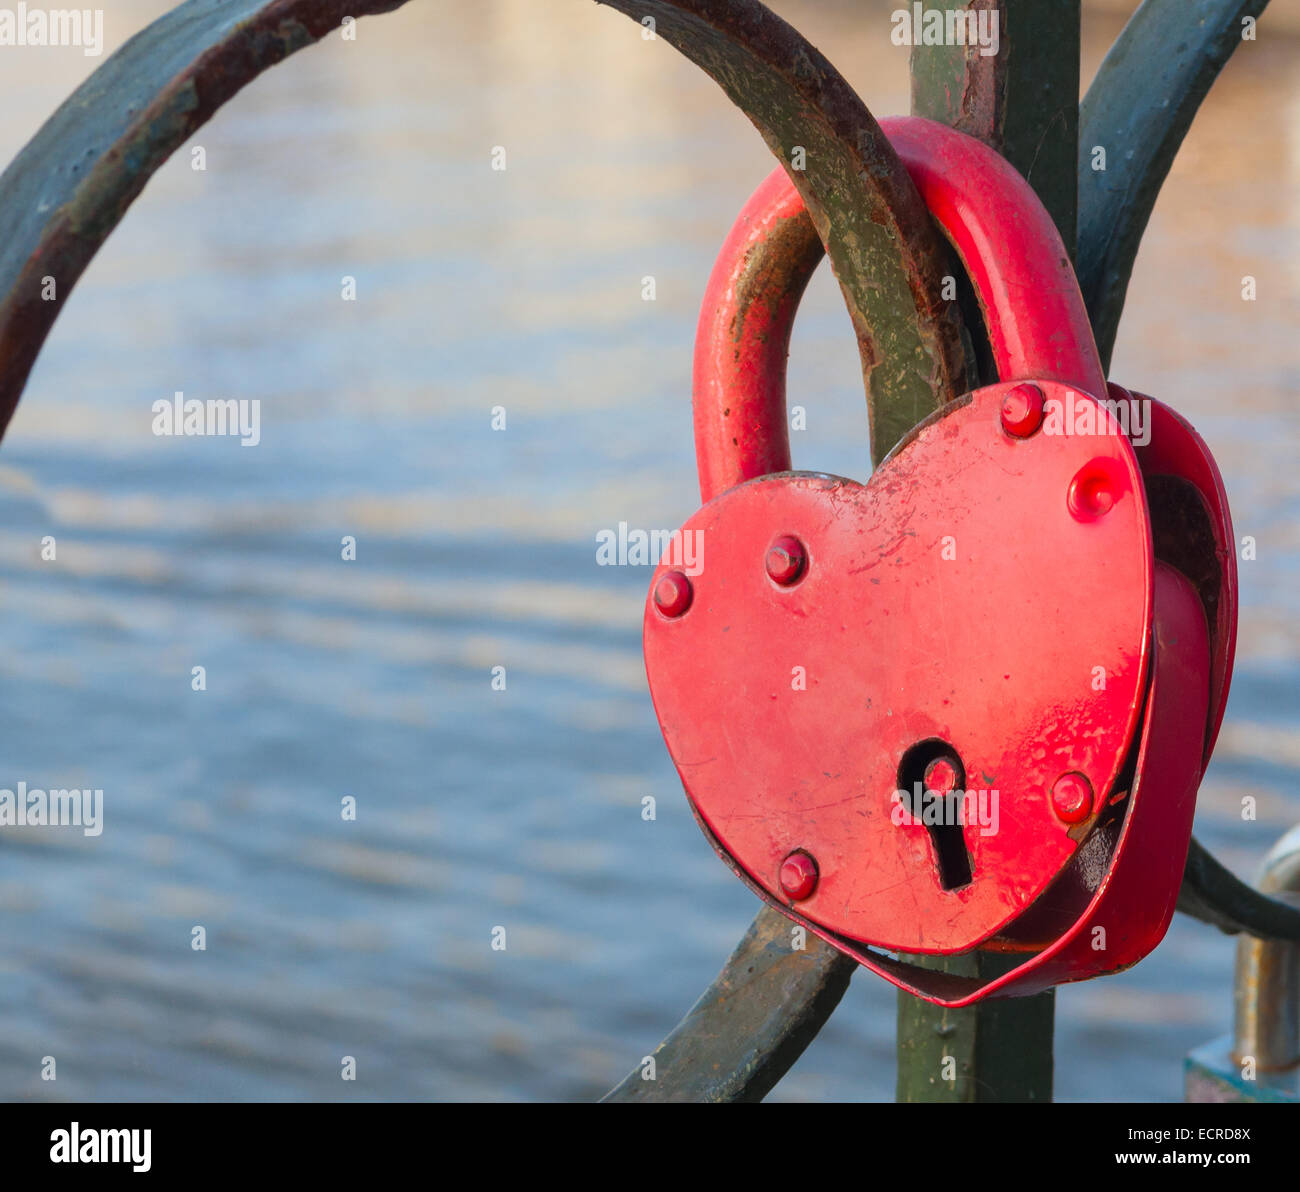 Aged rusty locked heart shaped padlock on metal railing Stock Photo